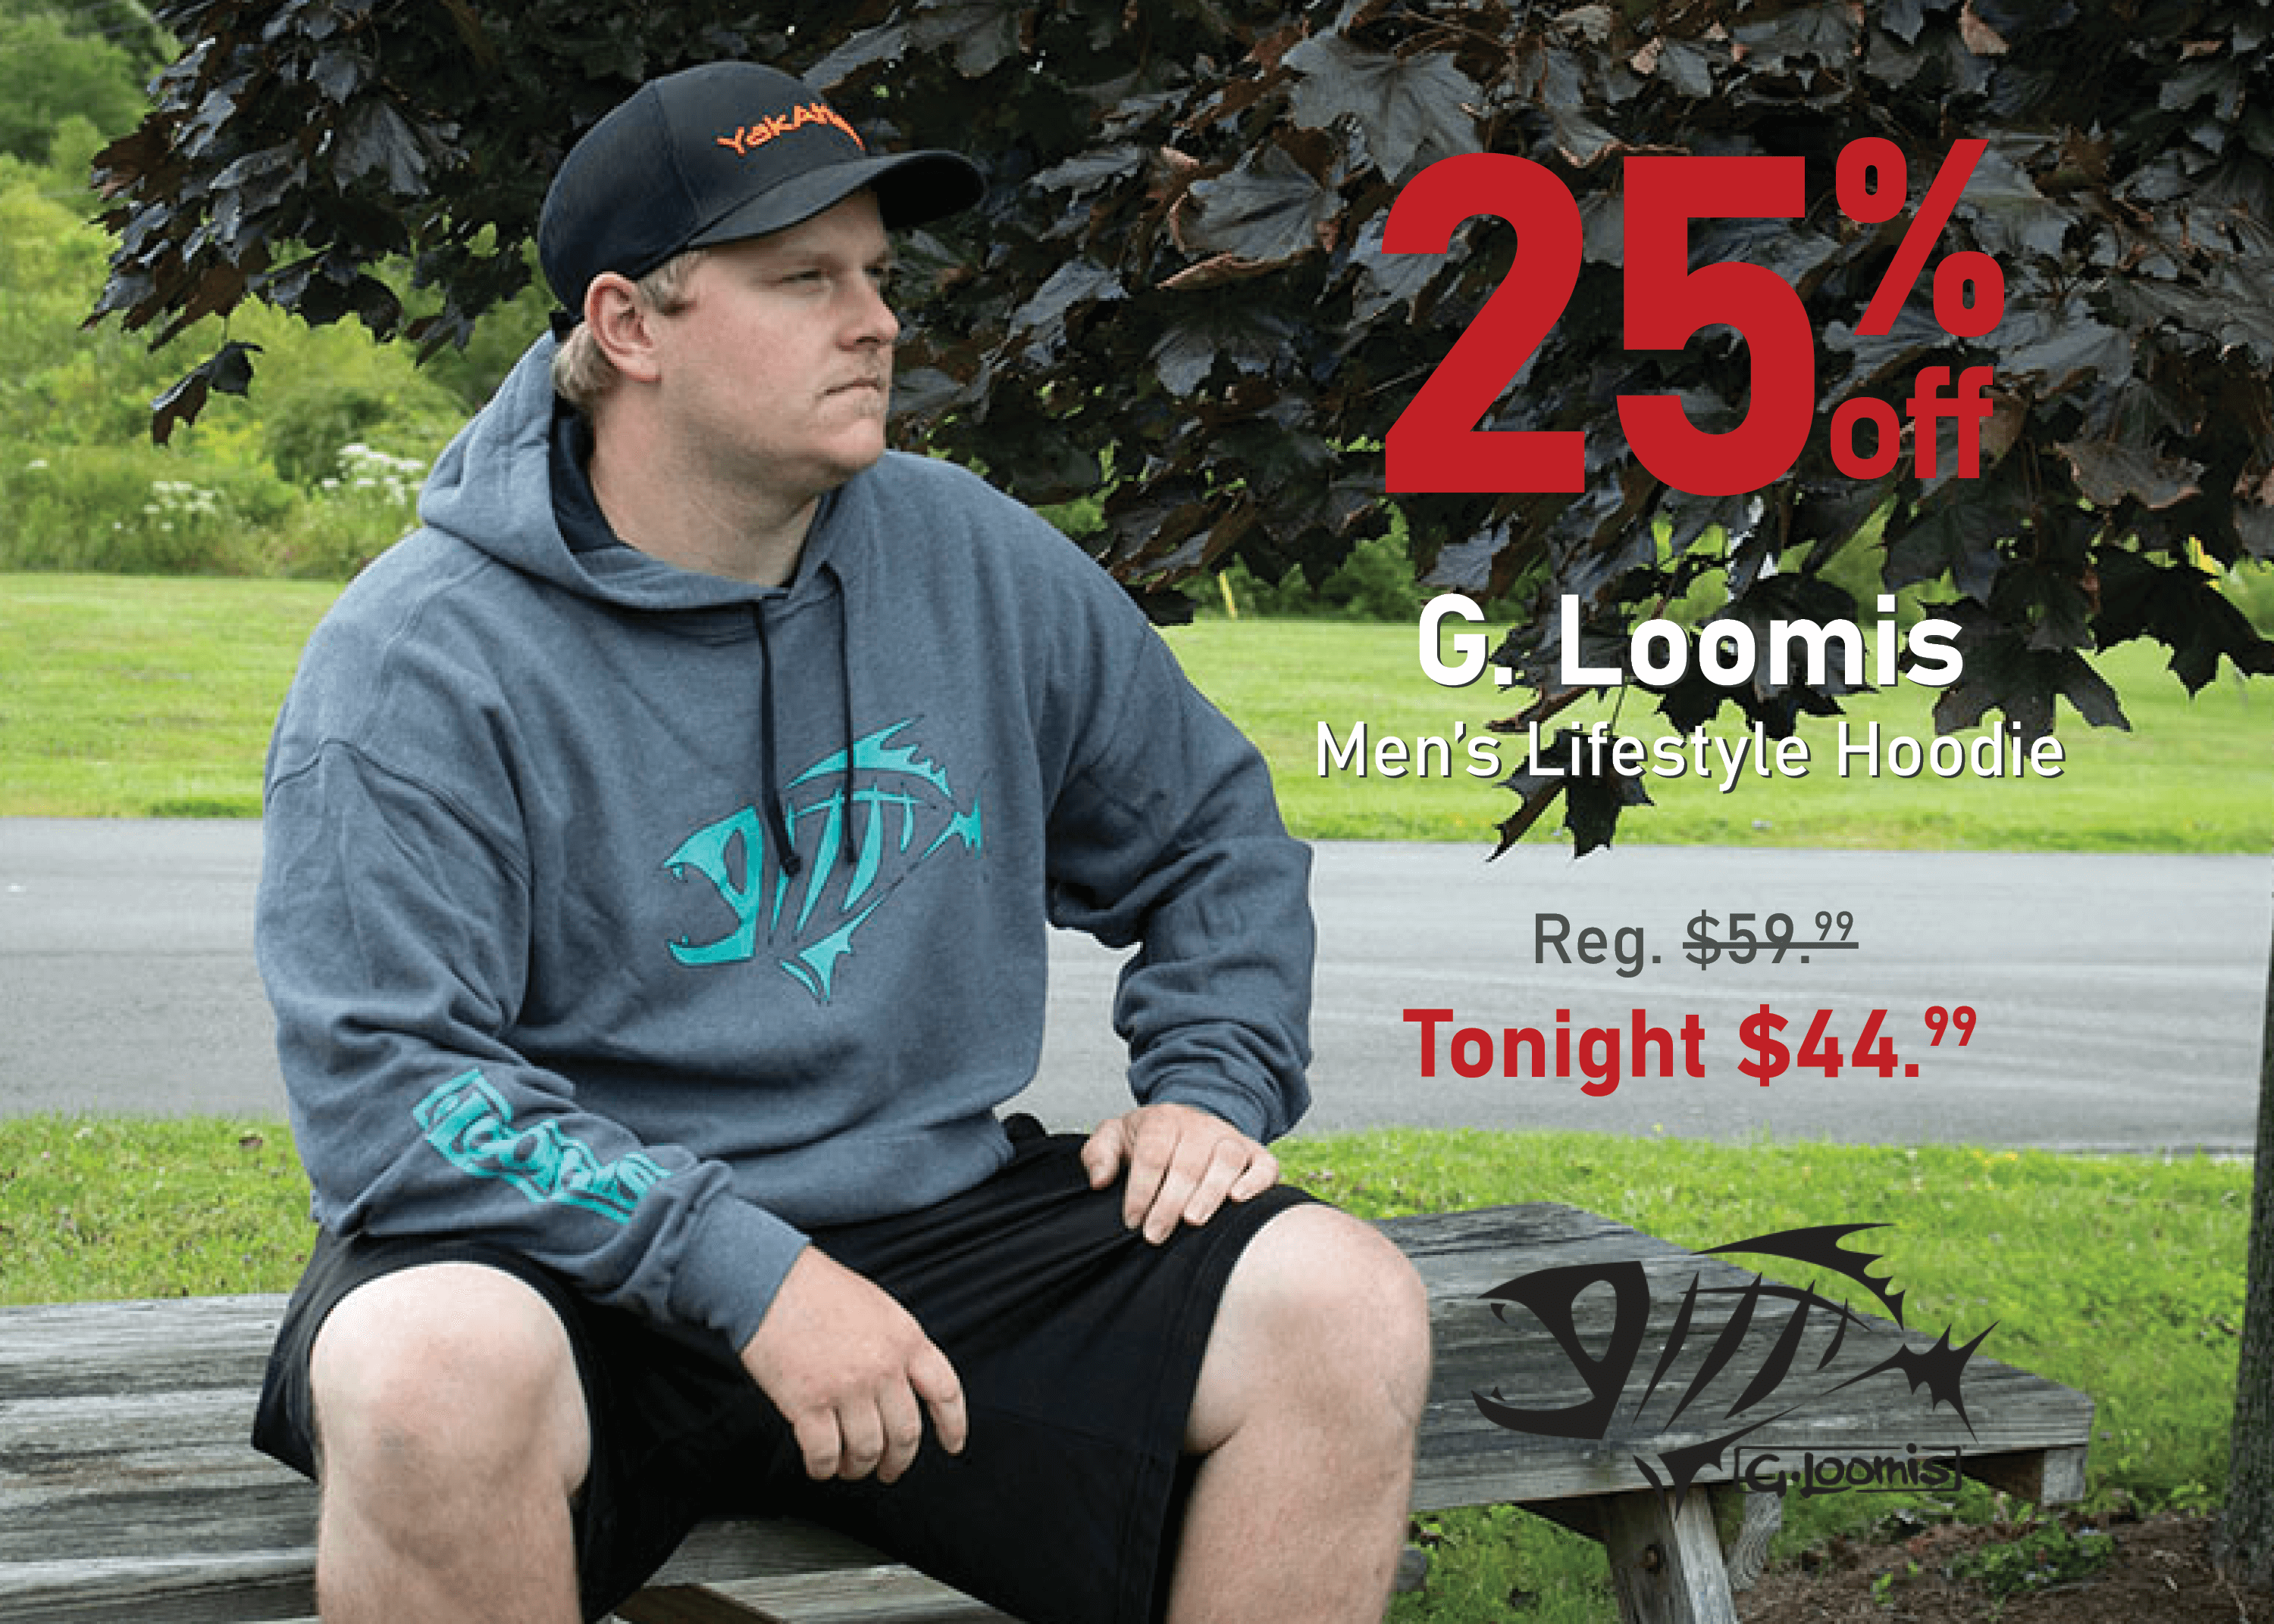 Save 25% on the G. Loomis Men's Lifestyle Hoodie